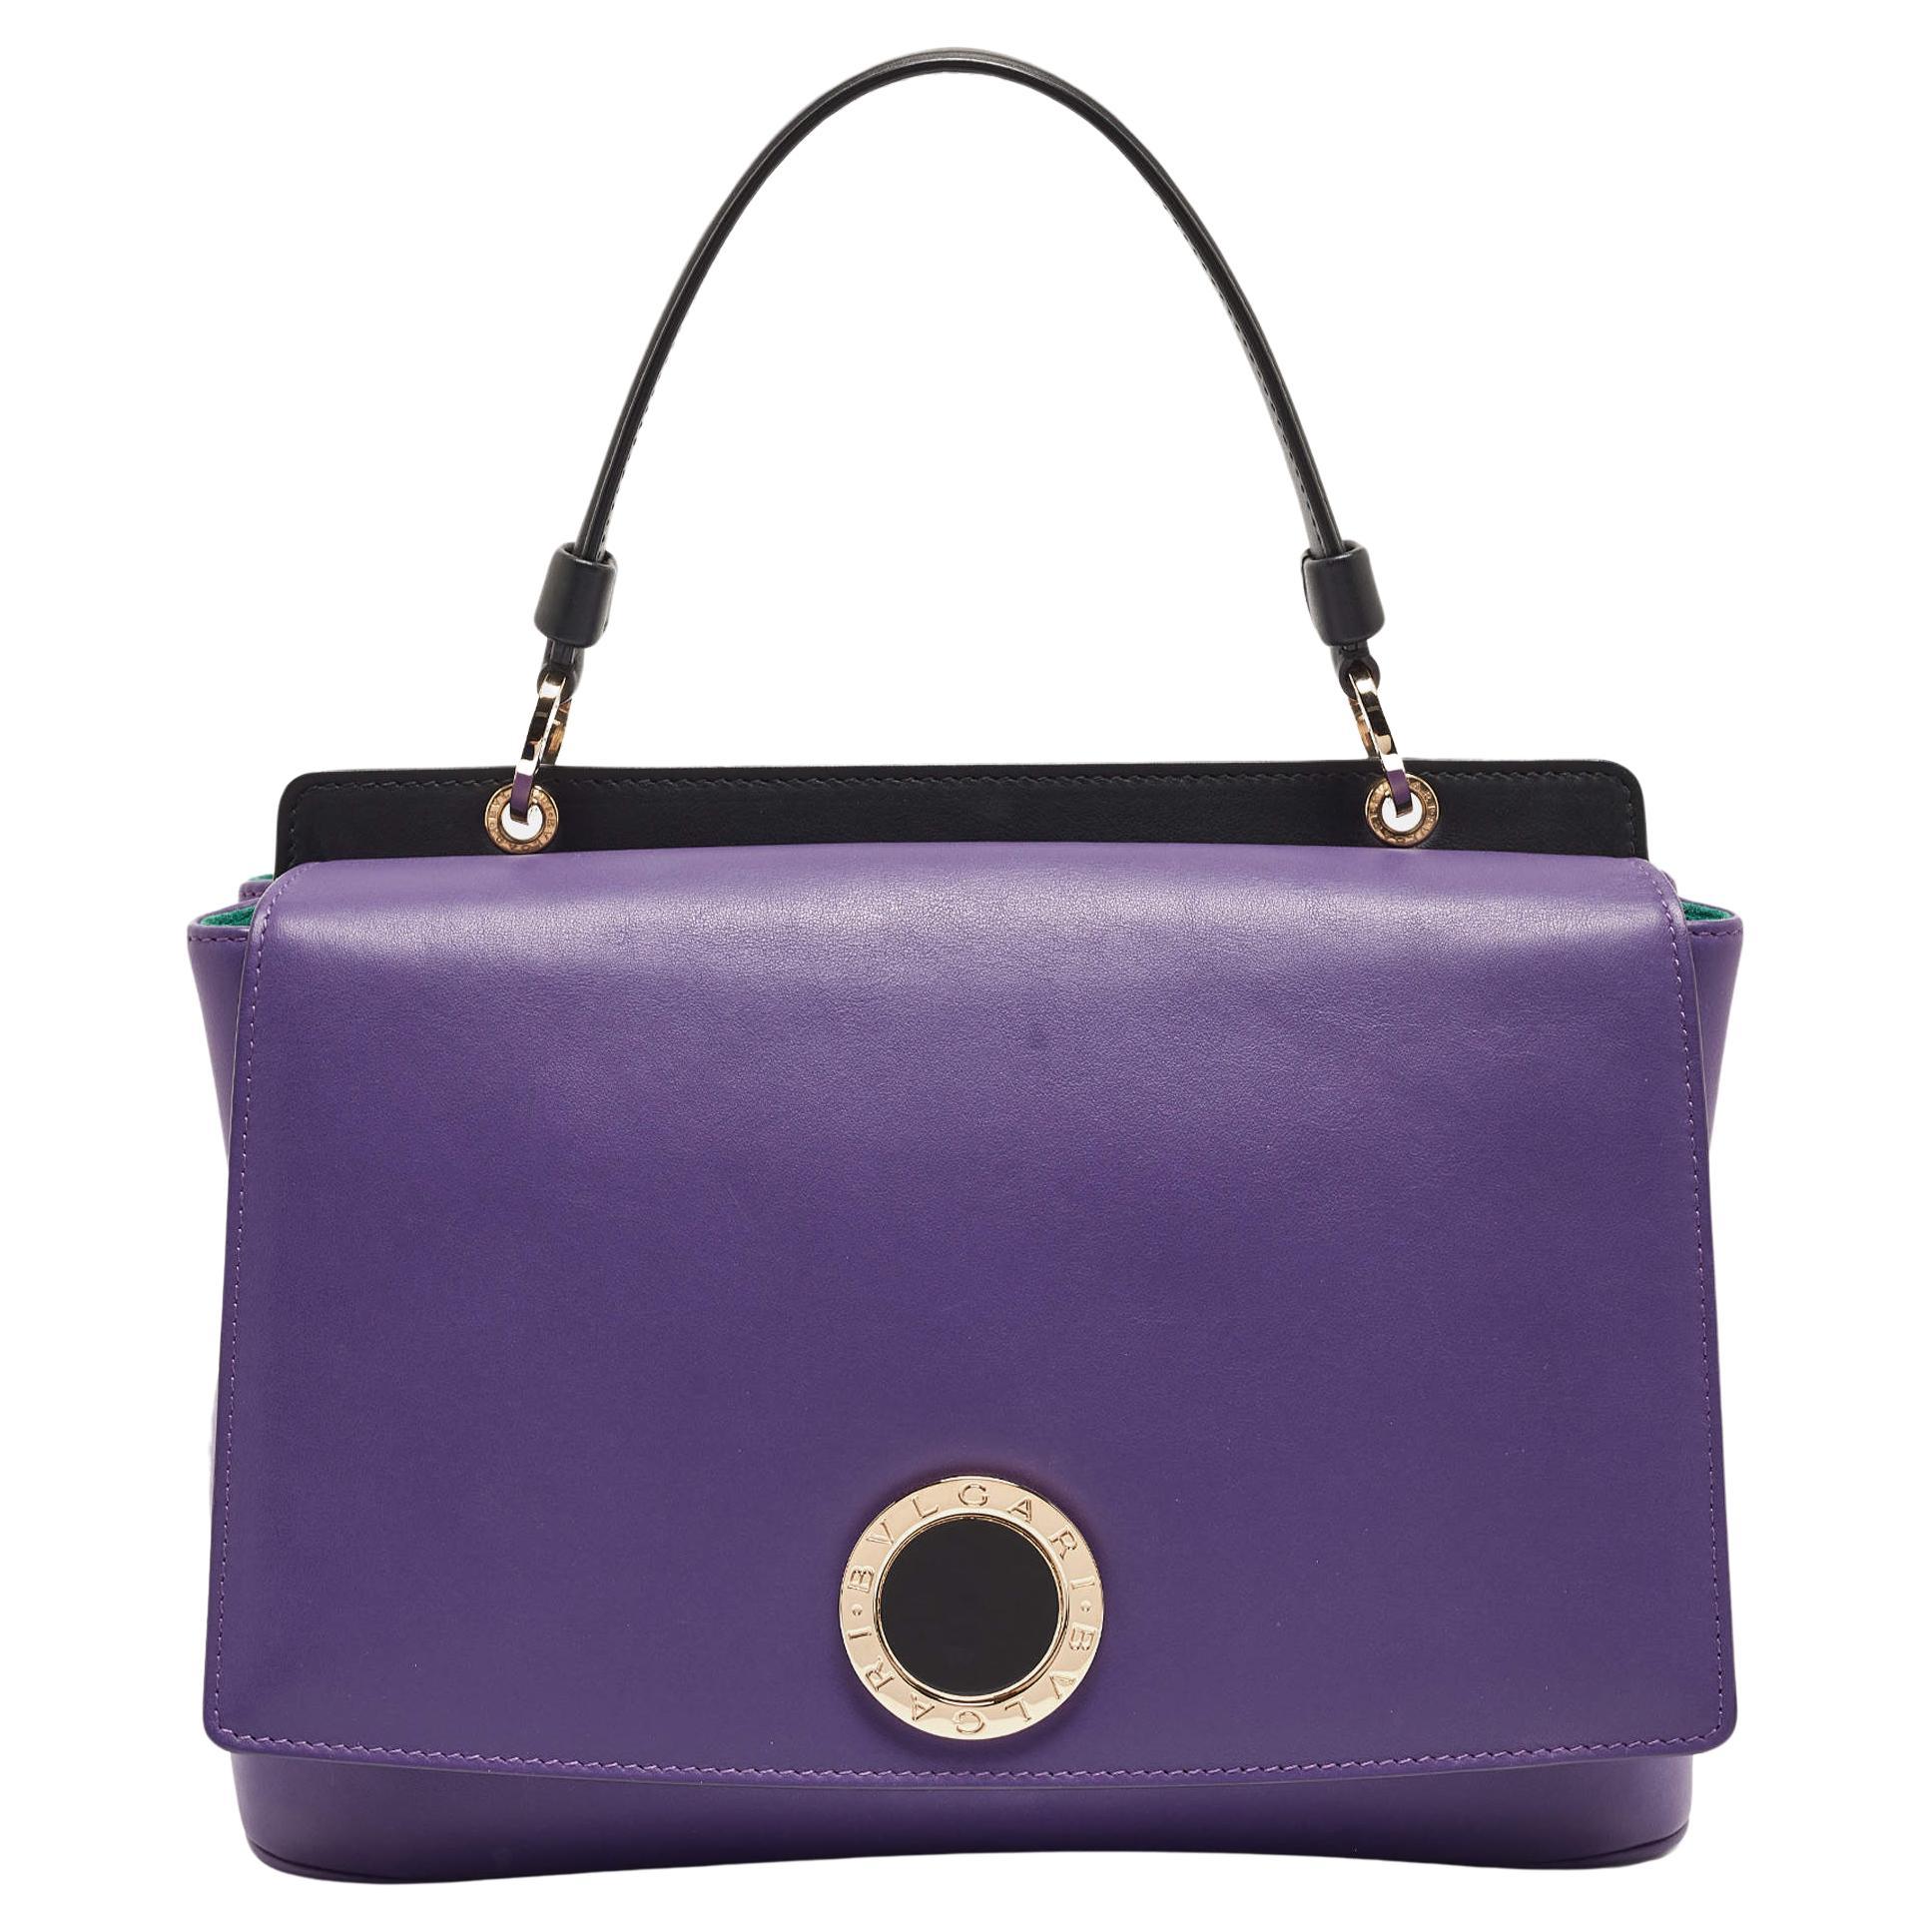 Bvlgari Purple/Black Leather Bvlgari Duet Top Handle Bag For Sale